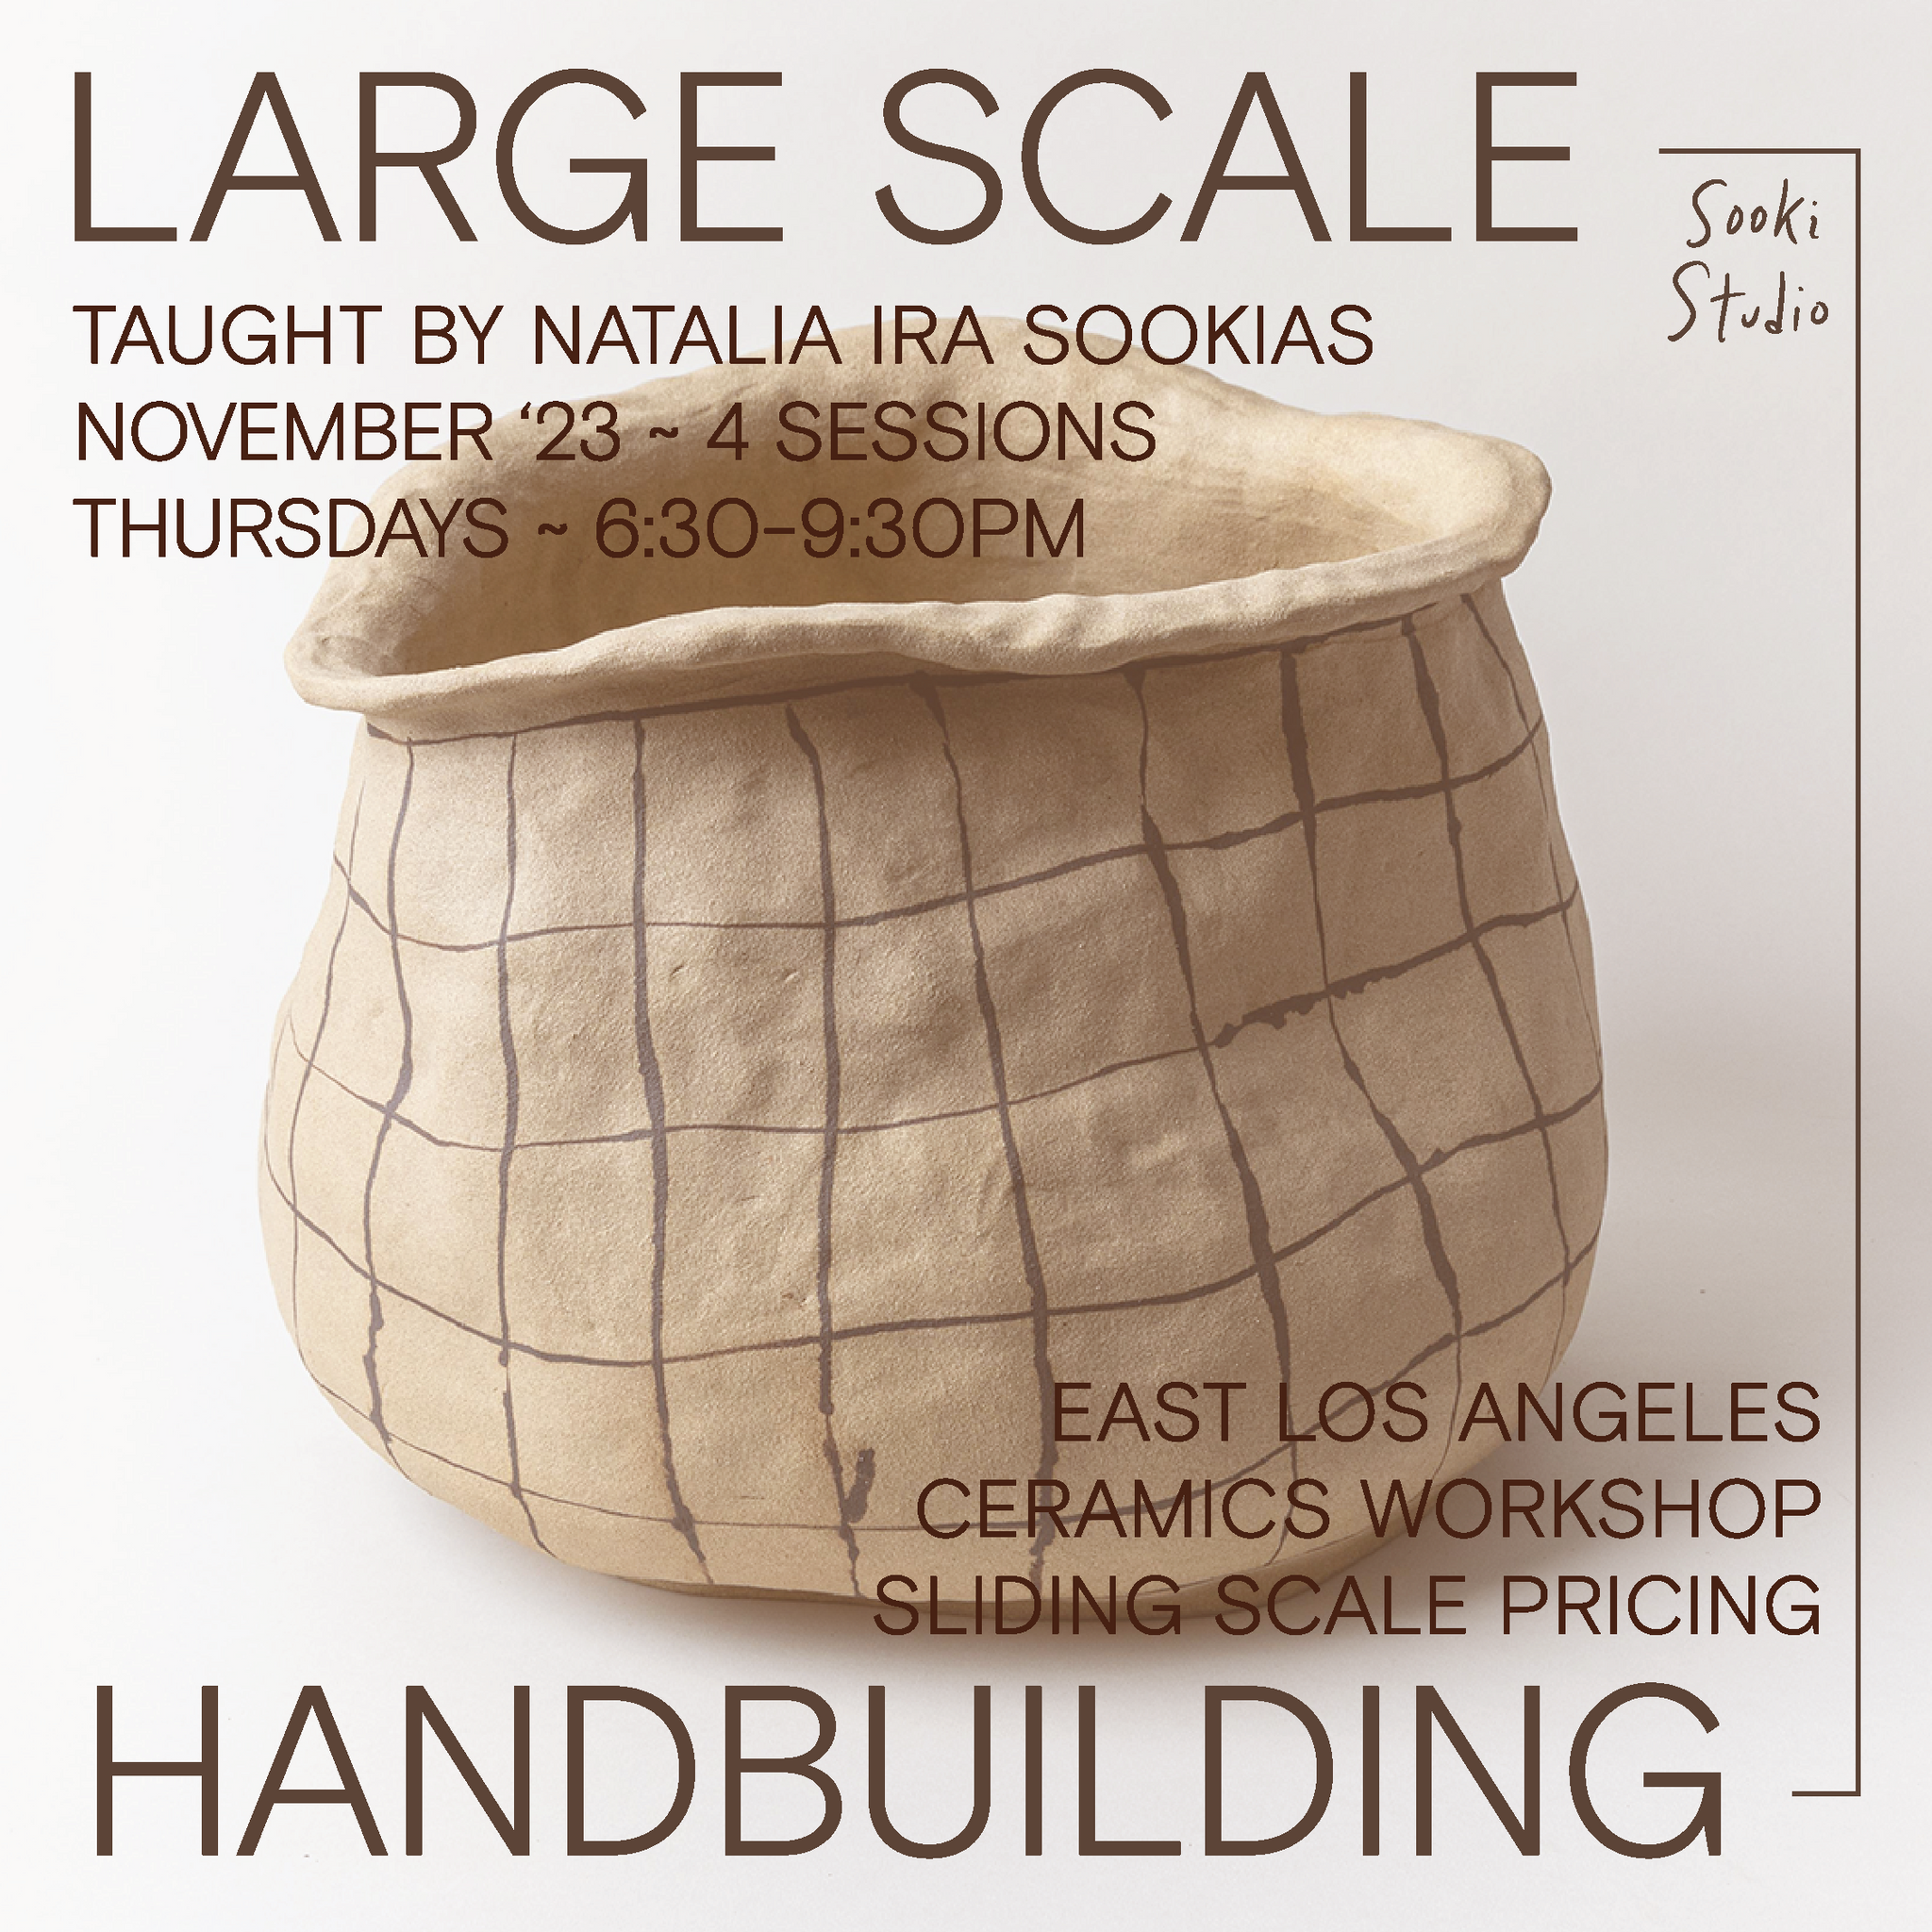 Large Scale Handbuilding with Natalia Ira Sookias - November